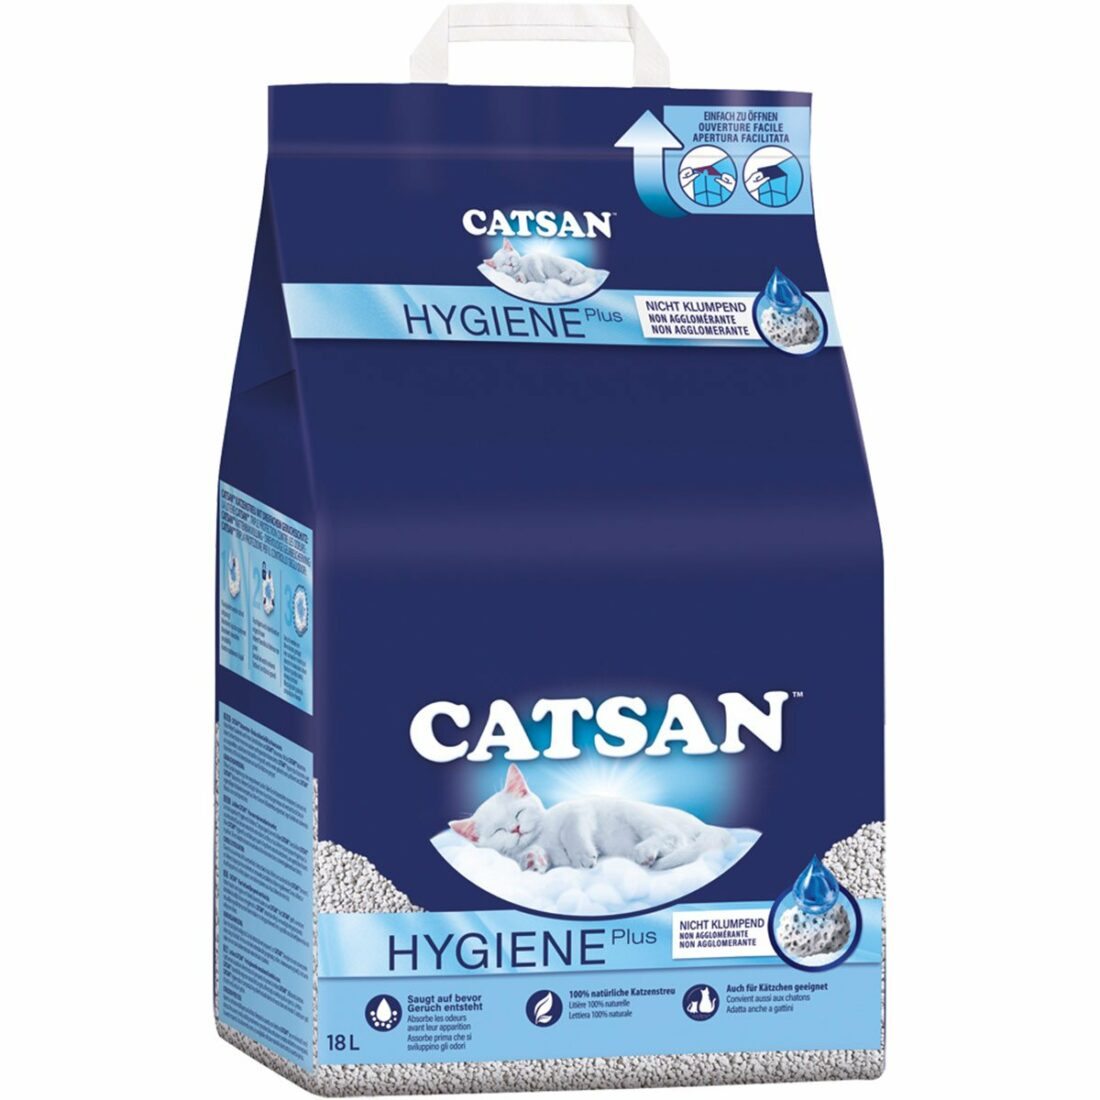 CATSAN Hygiene Plus 18